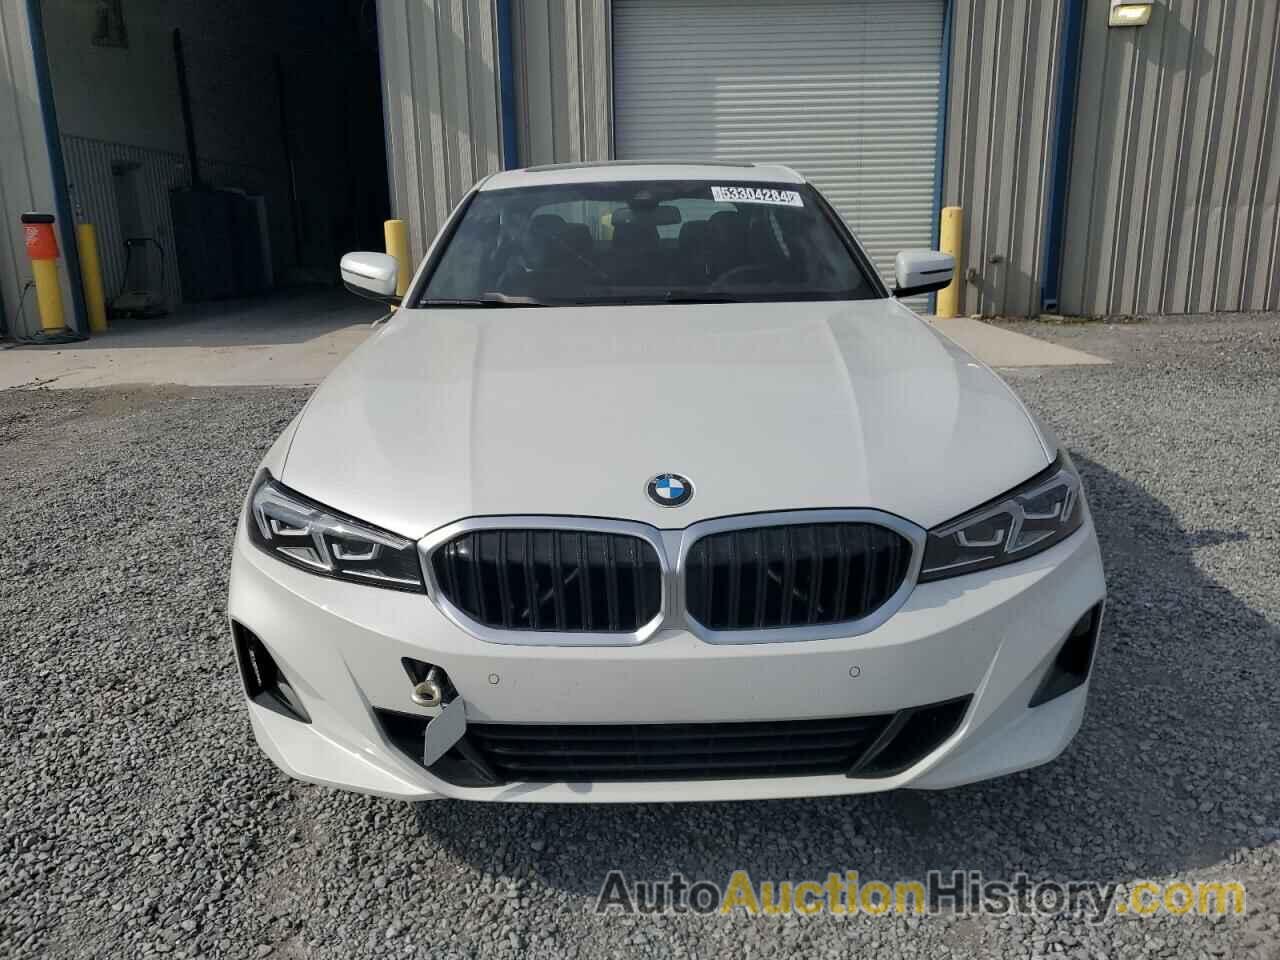 BMW 3 SERIES, 3MW89FF0XR8E28371